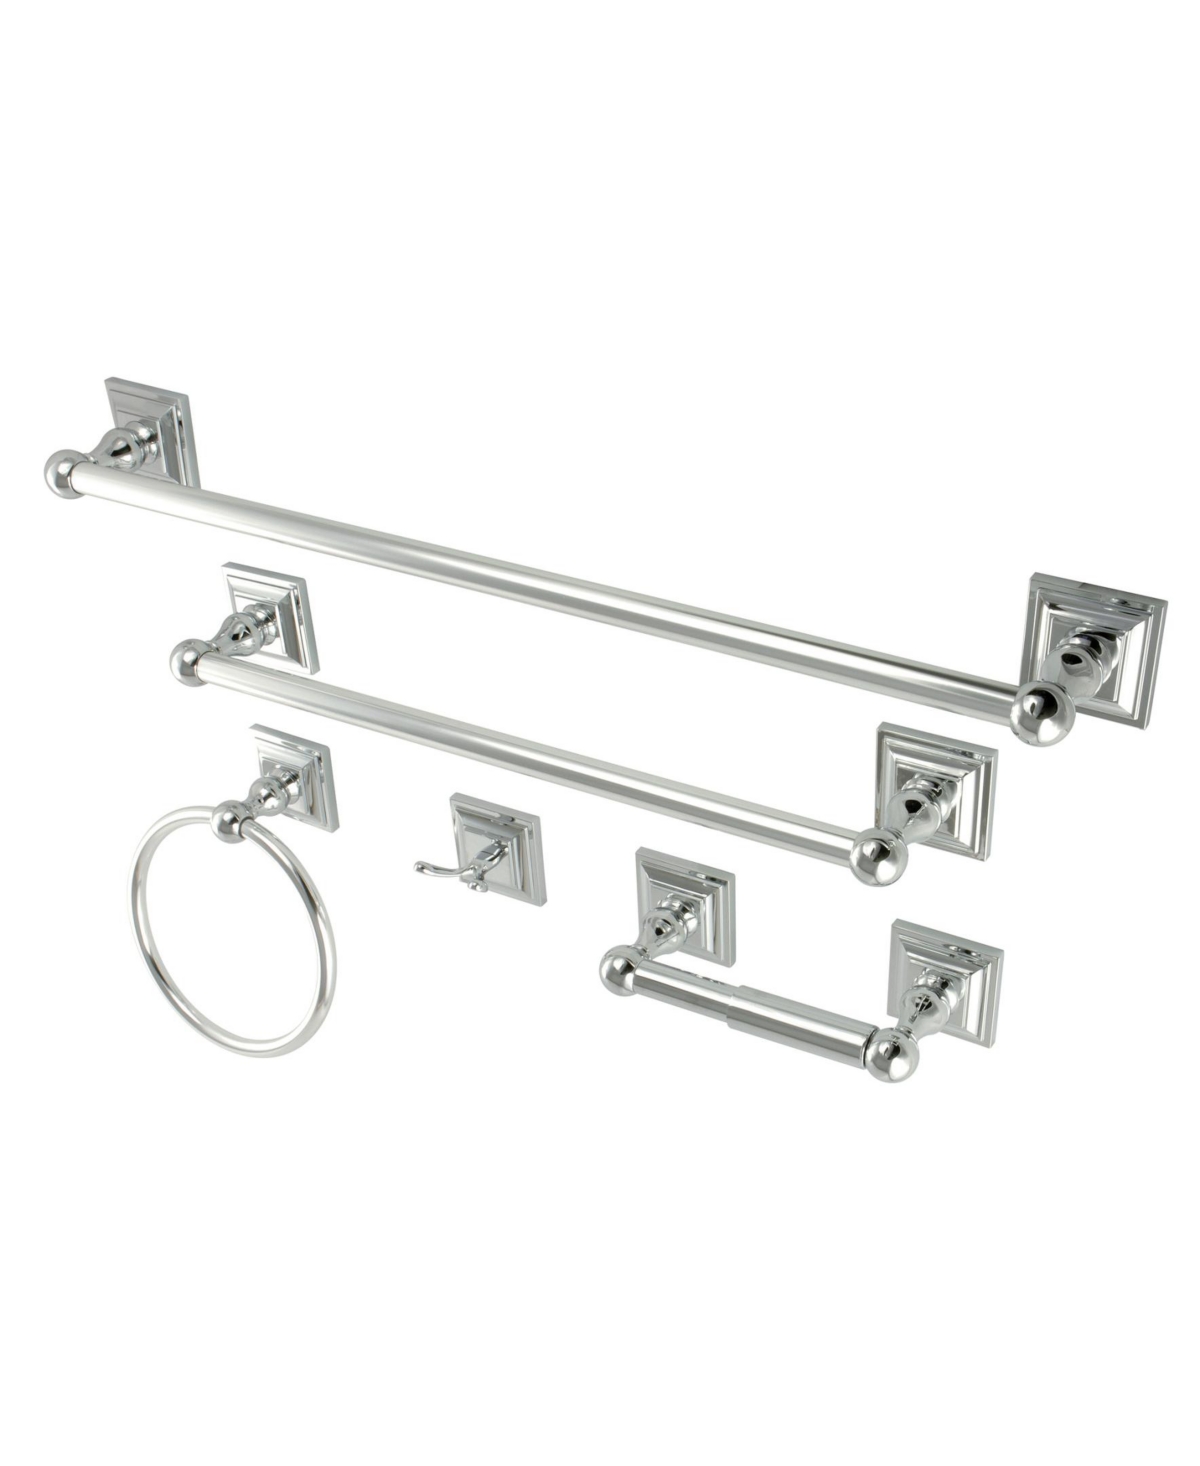 Kingston Brass Serano 5-Pc. Bathroom Accessory Set in Polished Chrome Bedding